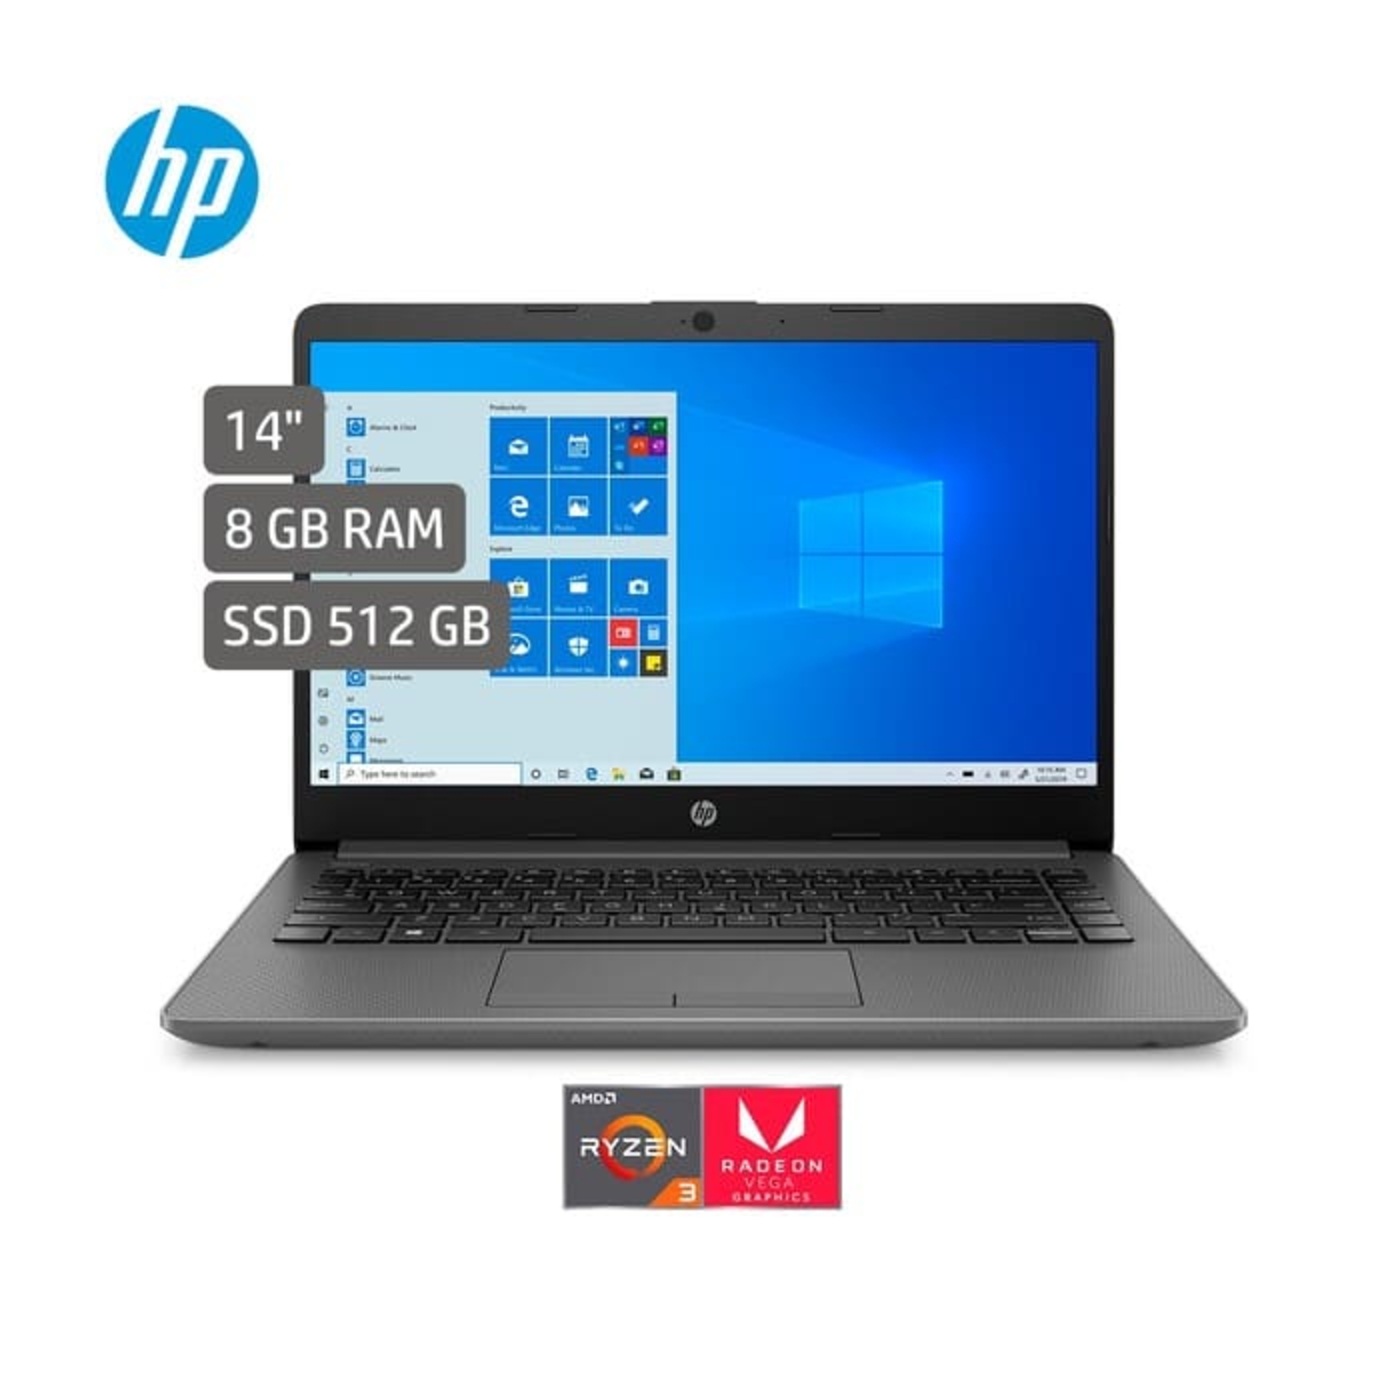 Computador Portátil HP 14" Pulgadas dk1009 - AMD Ryzen 3 - RAM 8GB - Disco SSD 512 GB - Negro